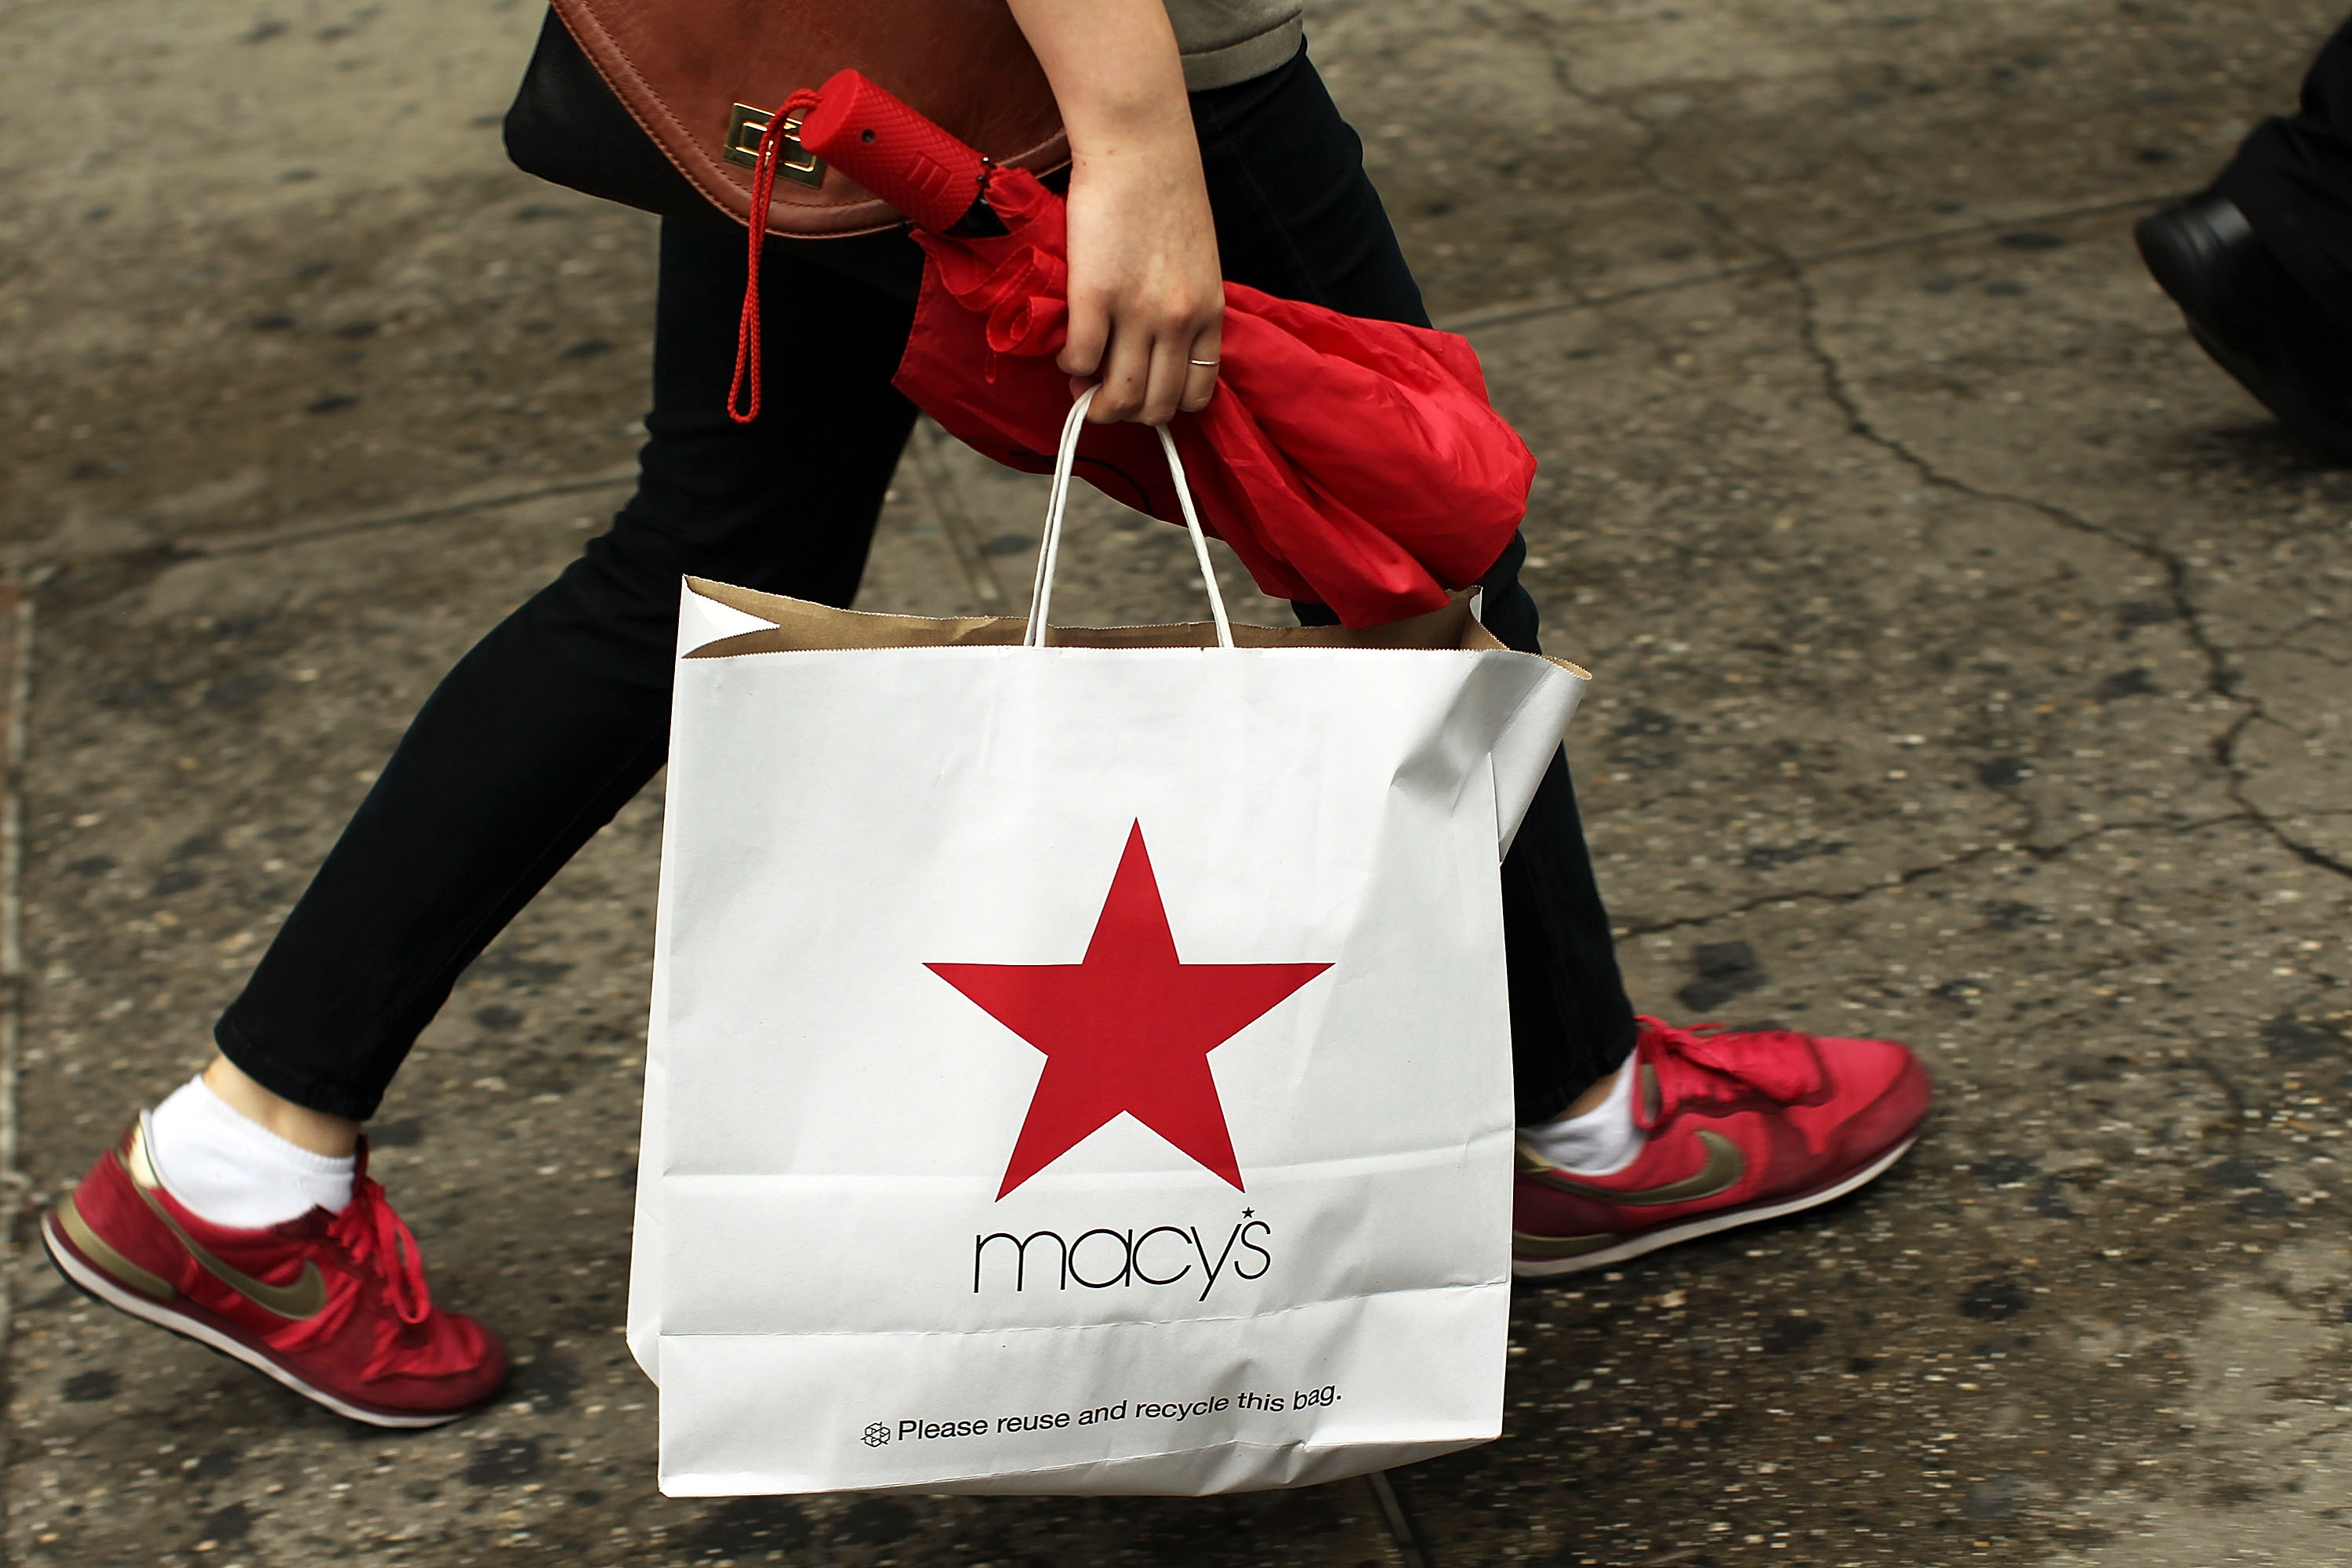 financialounge -  abbigliamento Amazon Macy's millennials